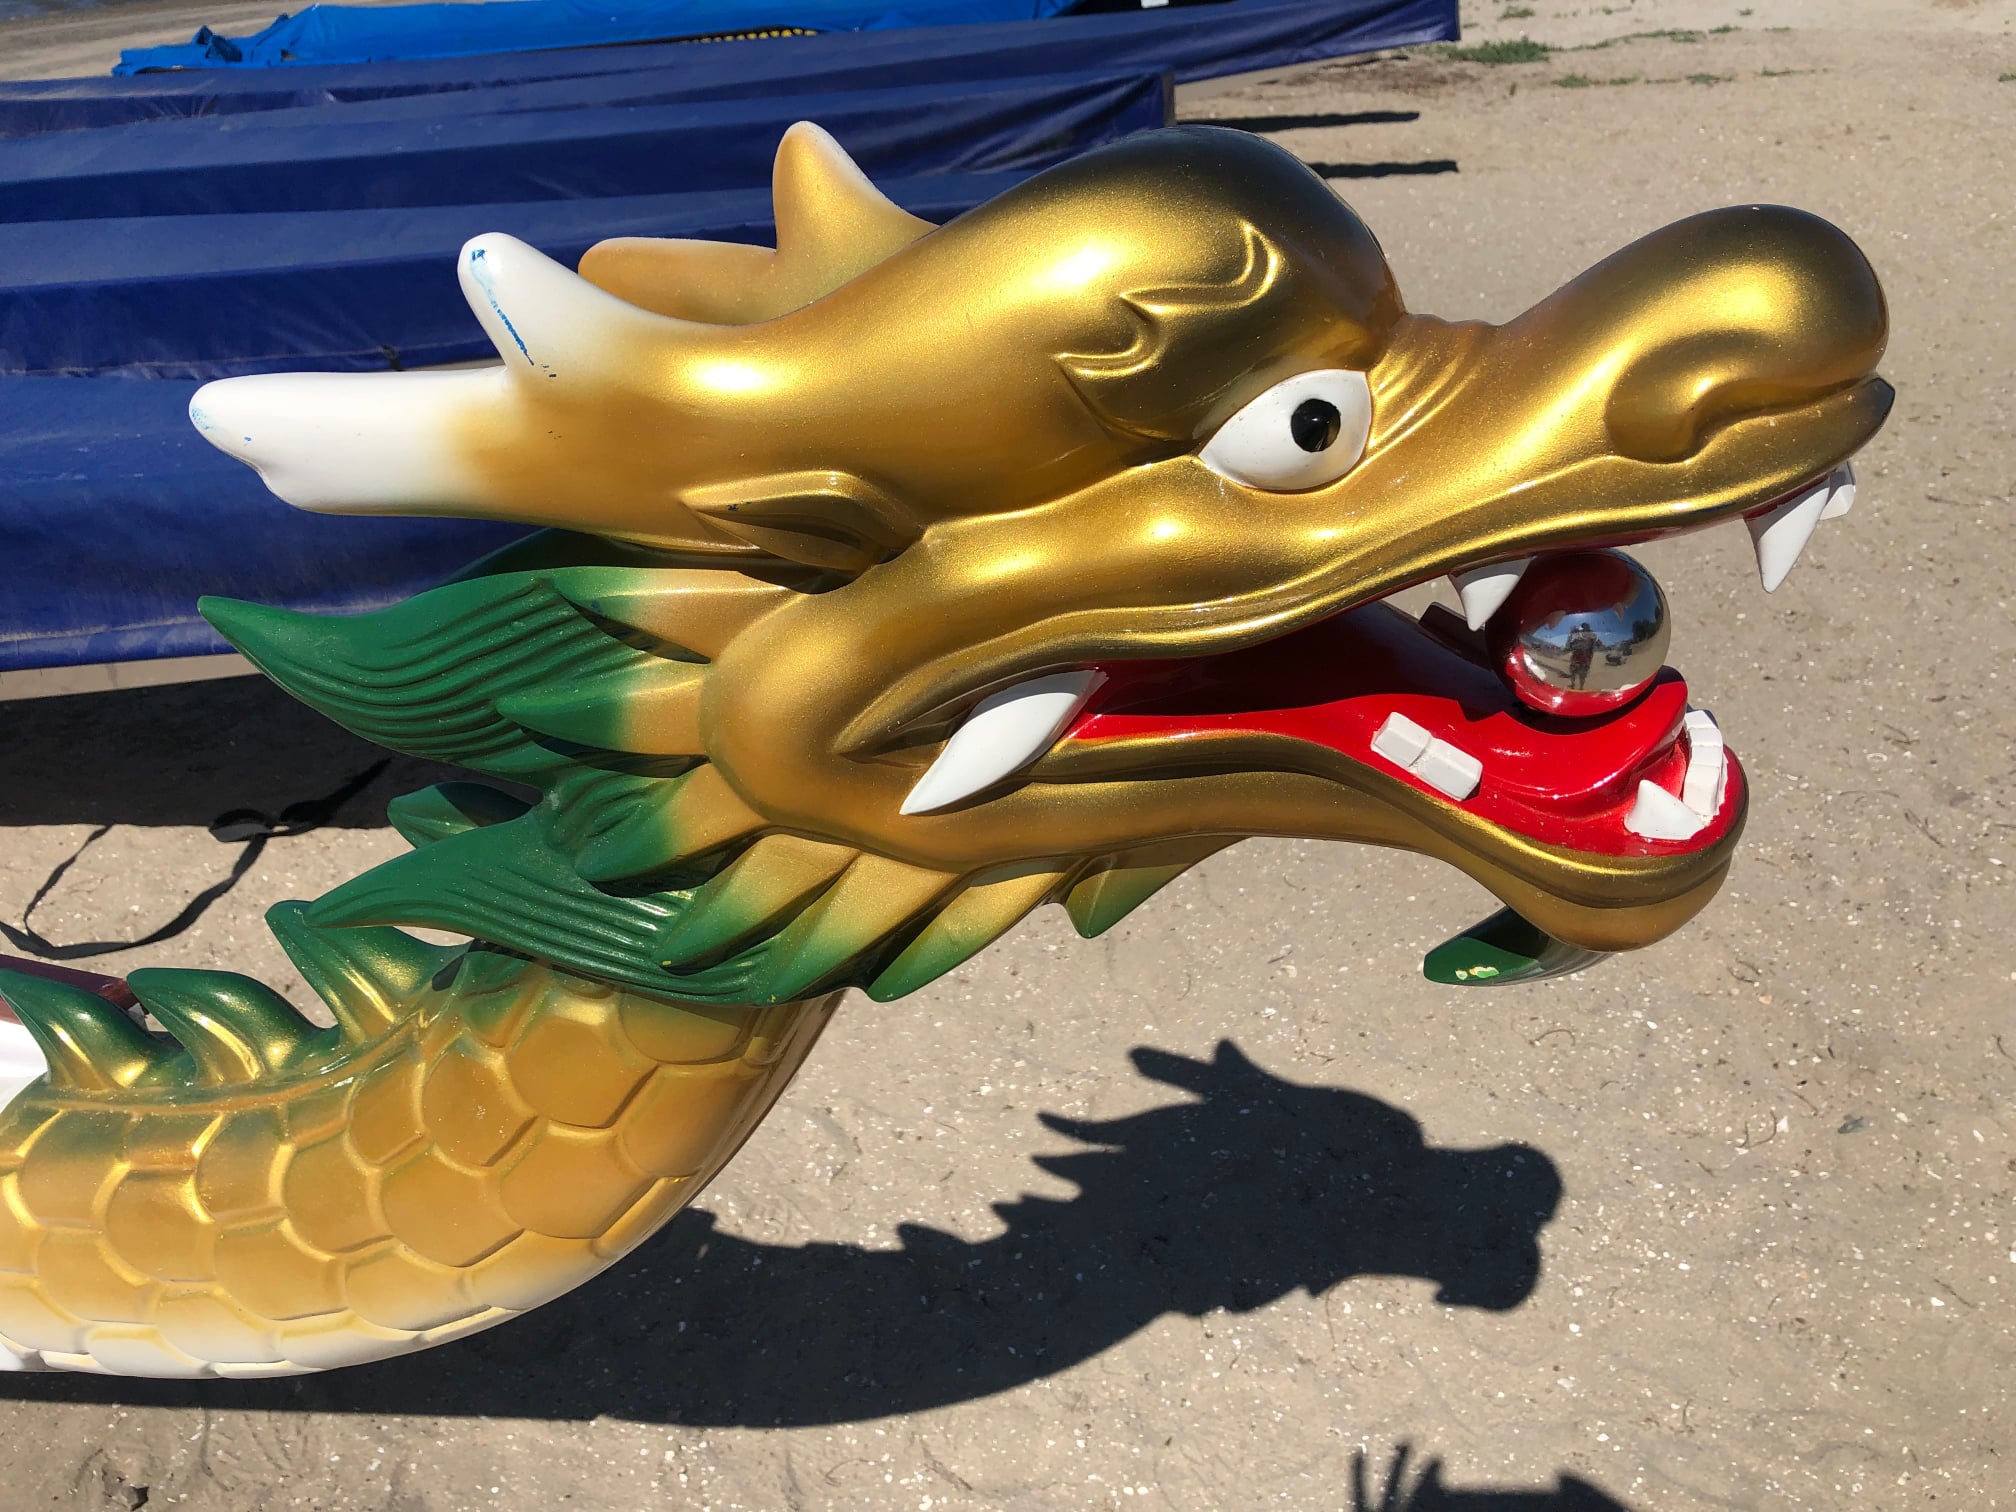 Dragon boat head for dragon boat racing